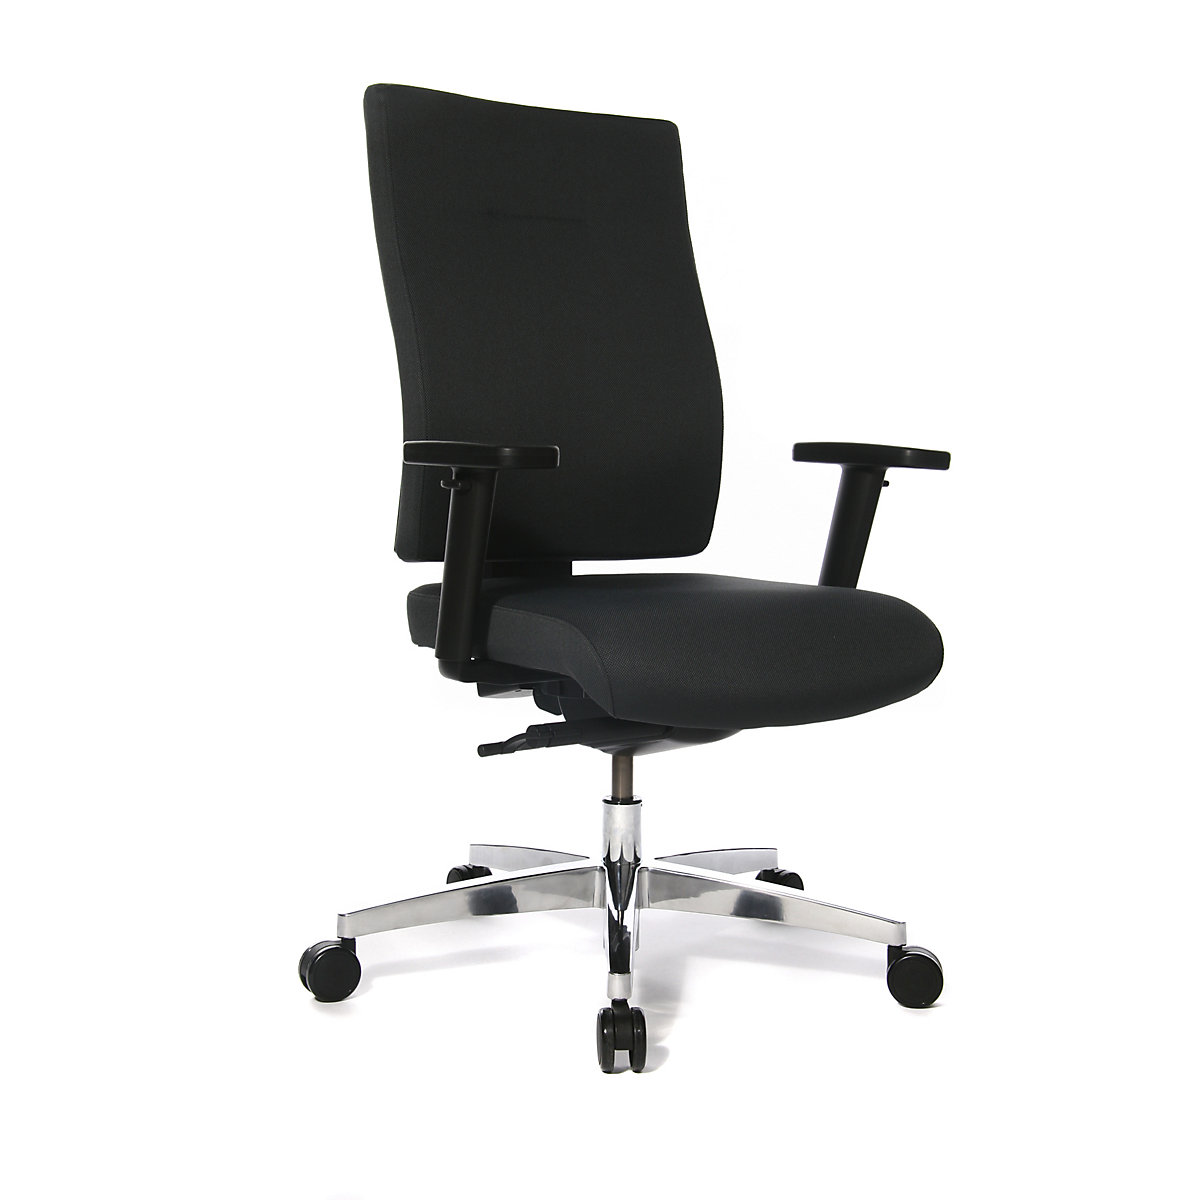 PROFI STAR 15 office swivel chair – Topstar, ergonomic back rest, black-8